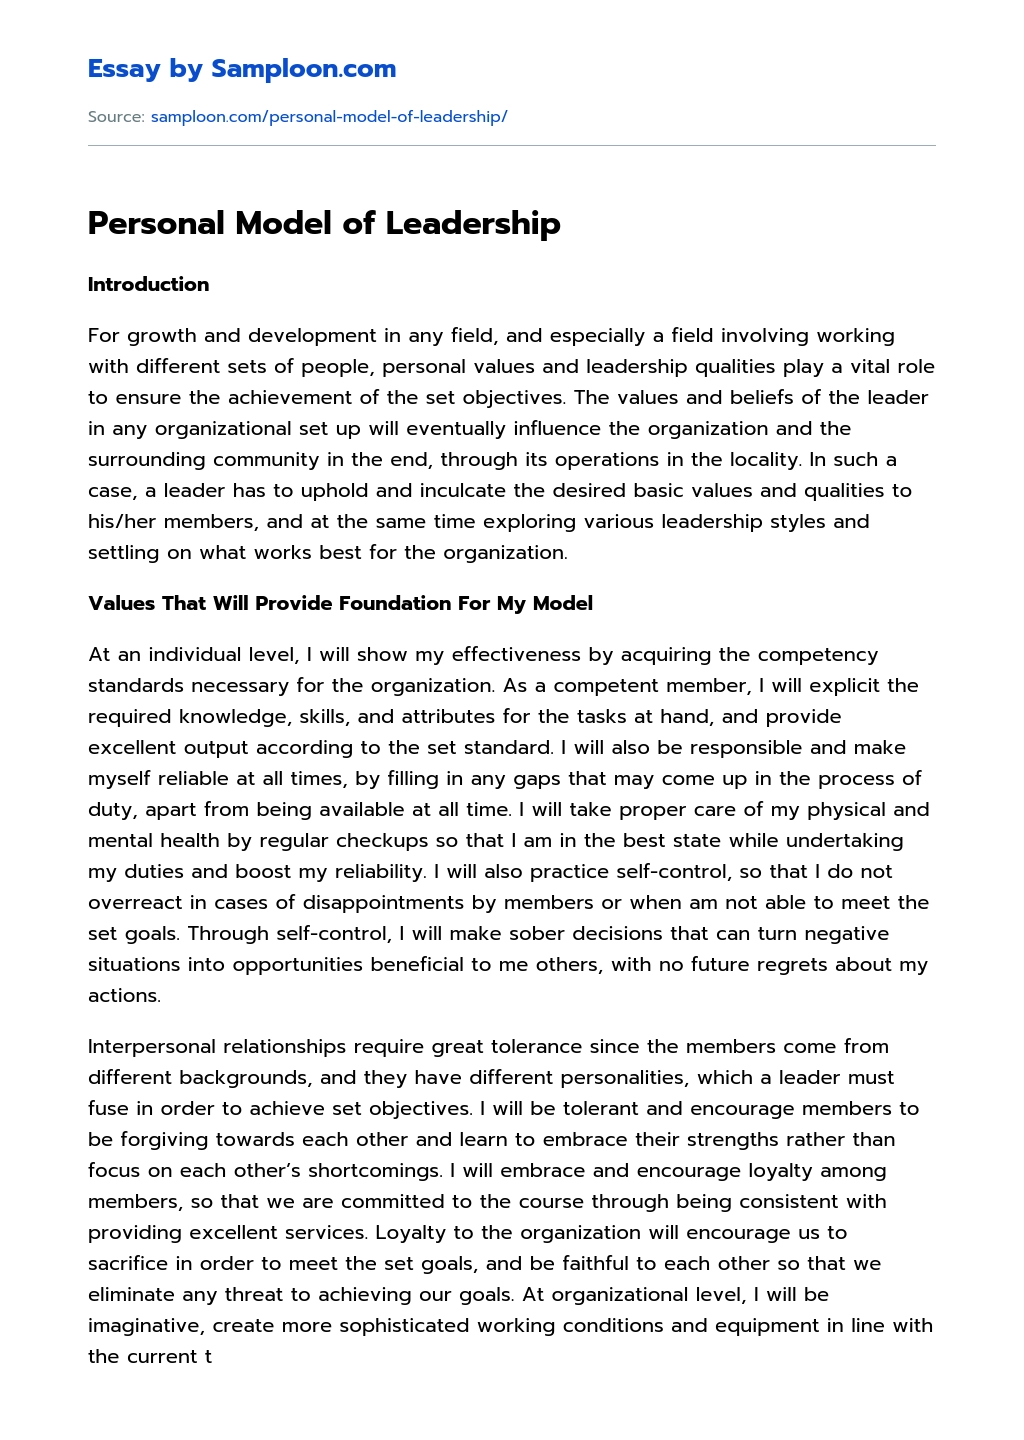 Personal Model of Leadership essay